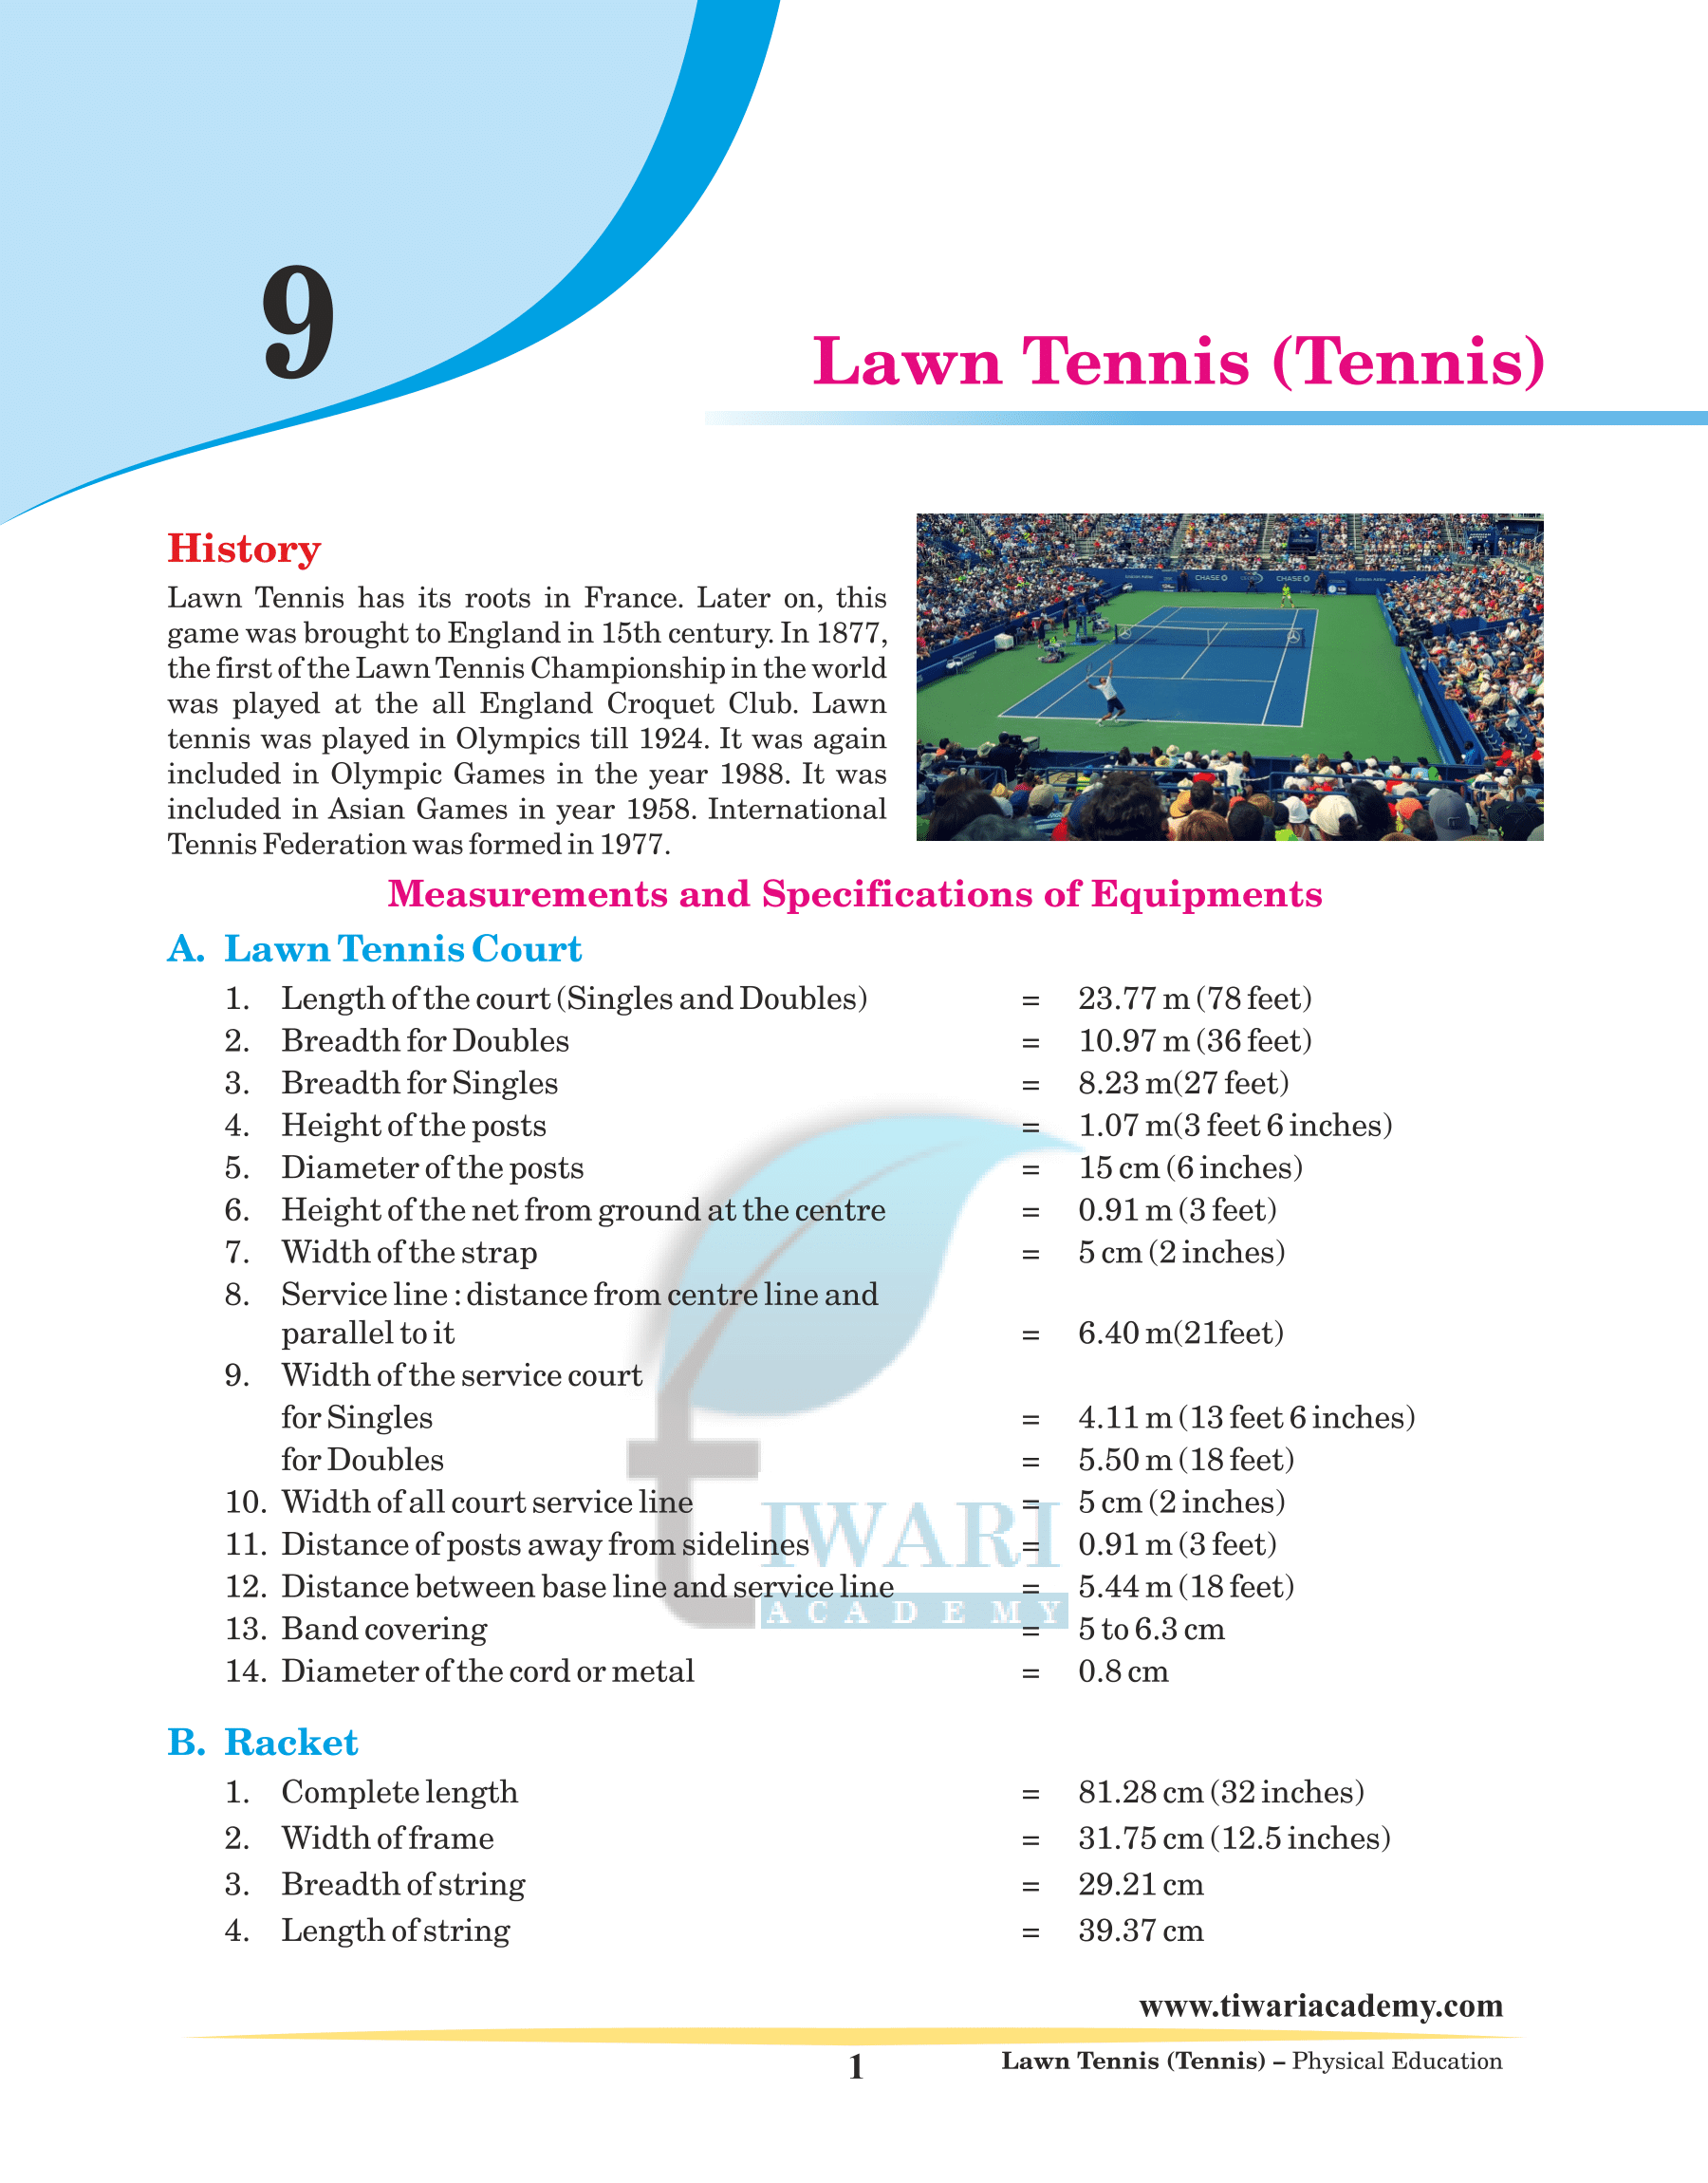 How do play Lawn Tennis?